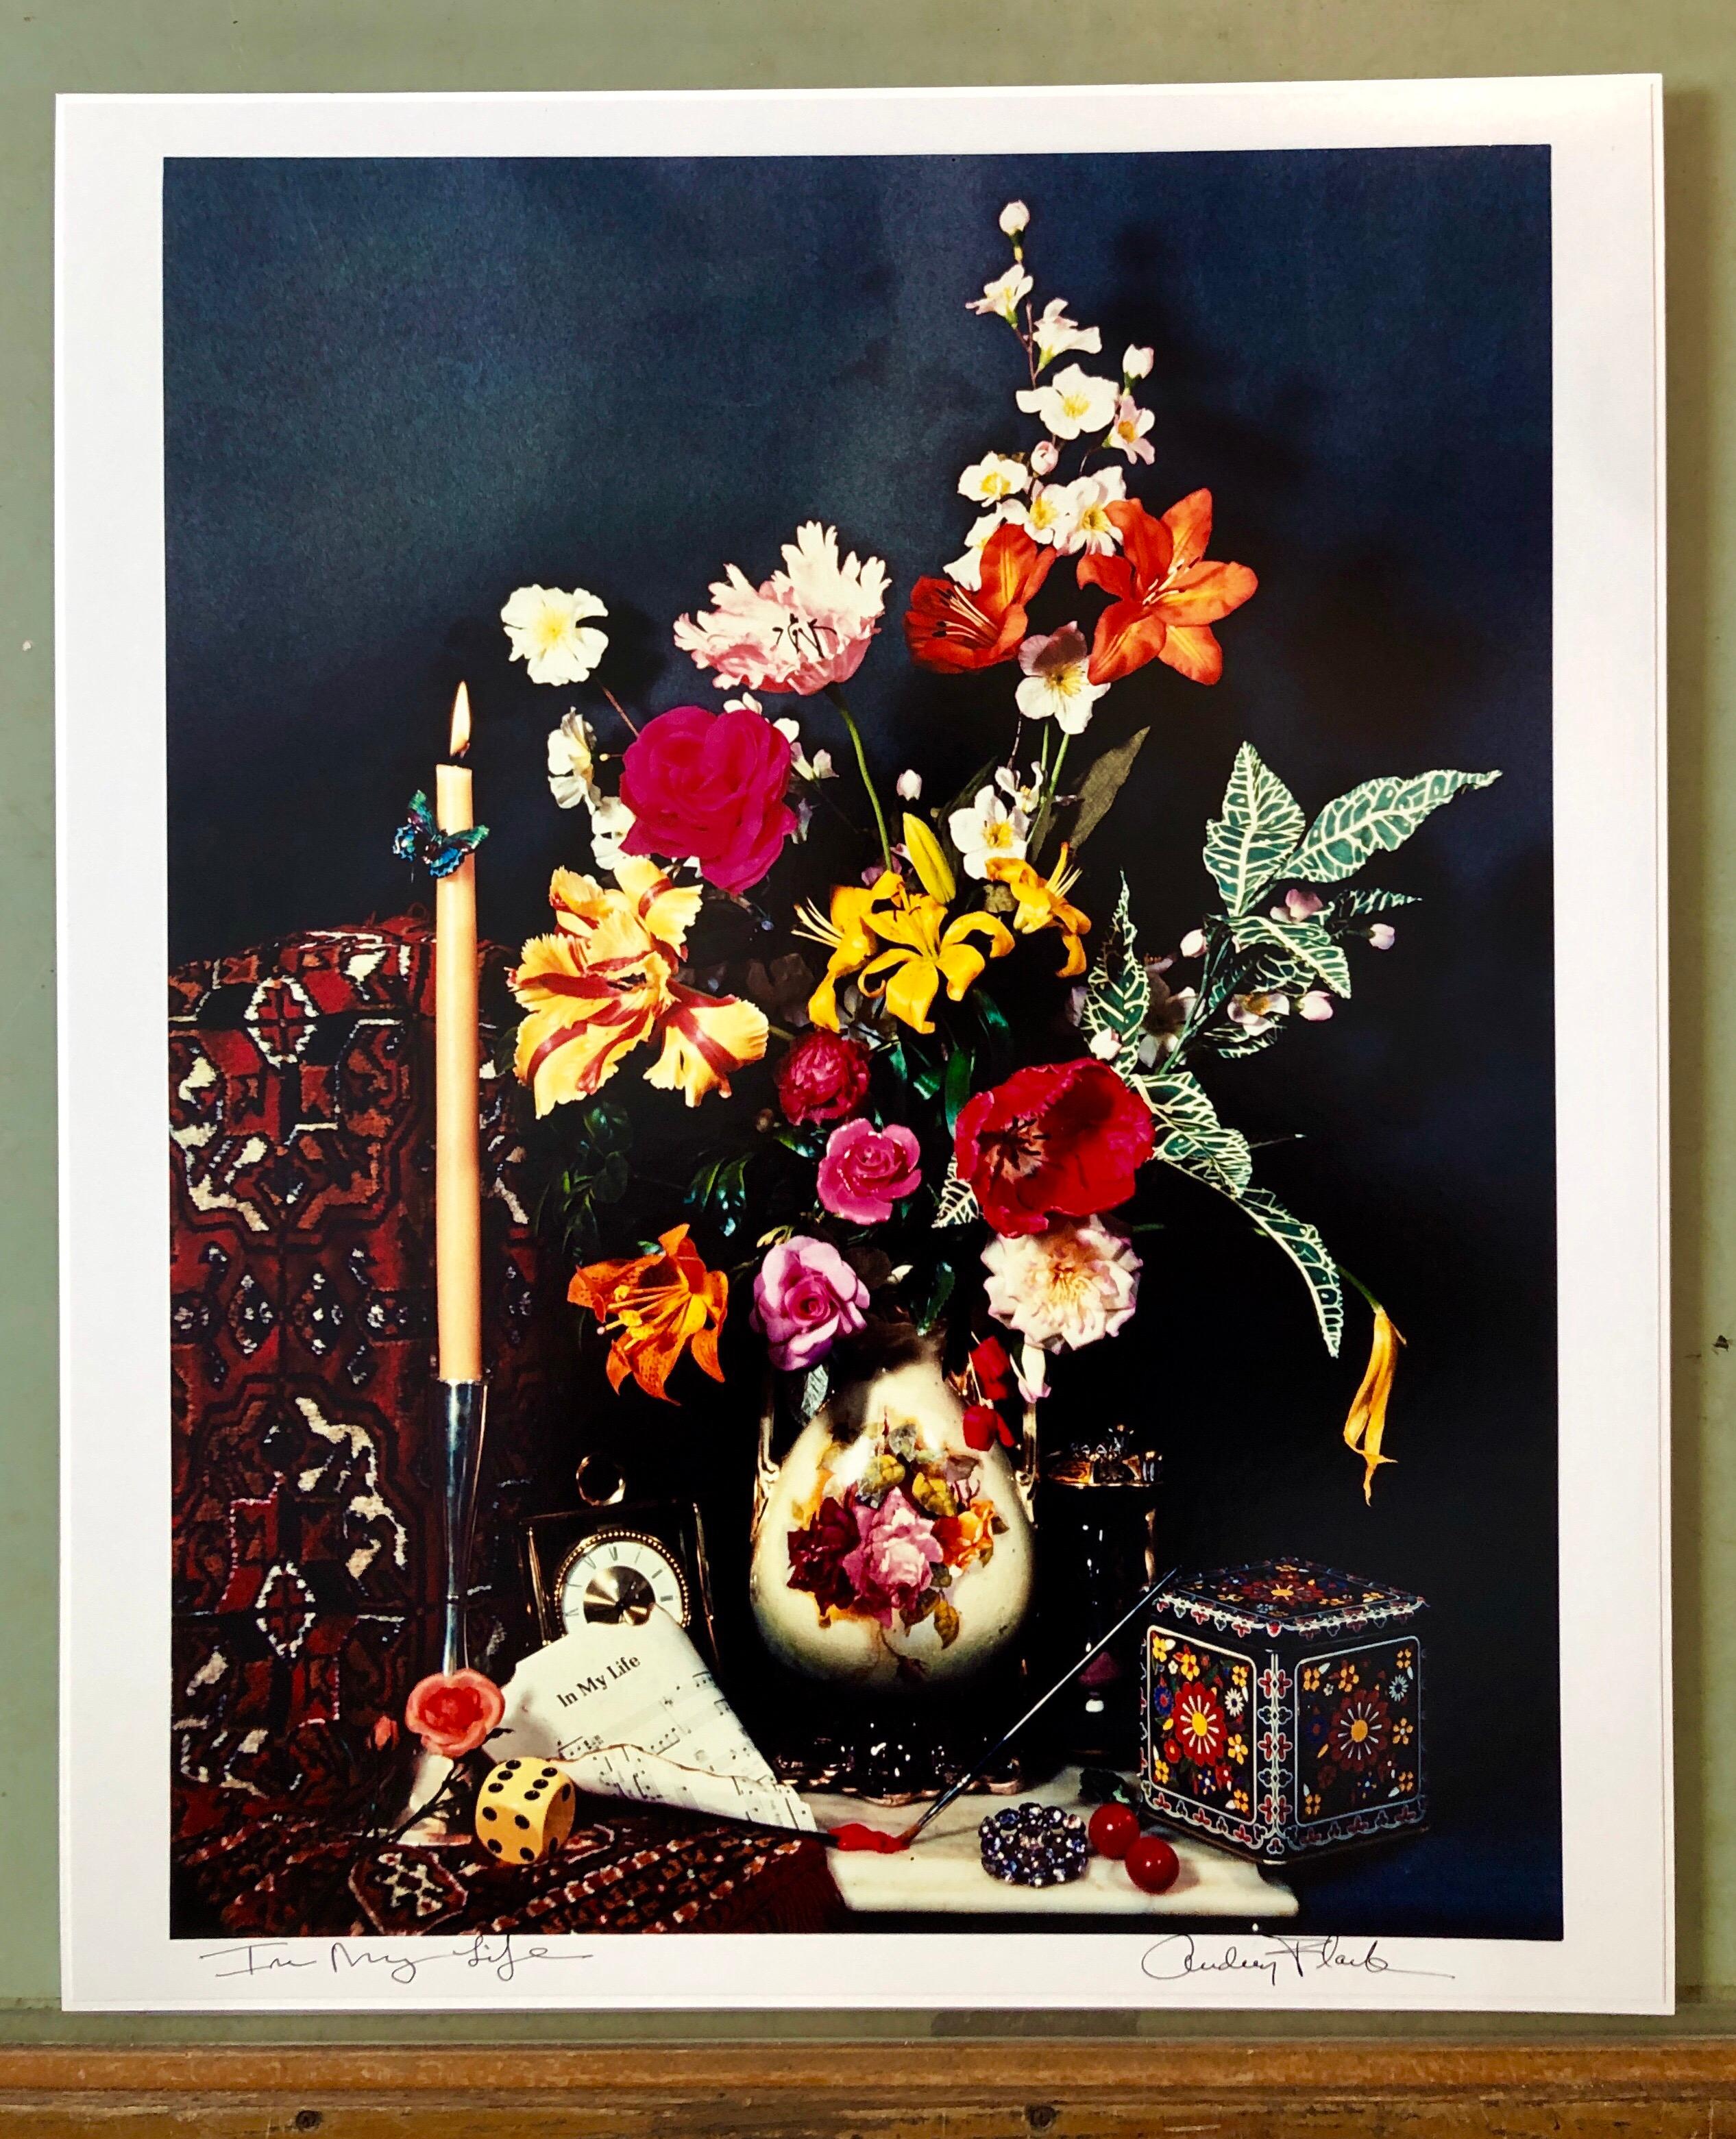 Vintage-Farbfotografie-Dynastie-Transferdruck „In My Life“ Audrey Flack, Pop Art 6